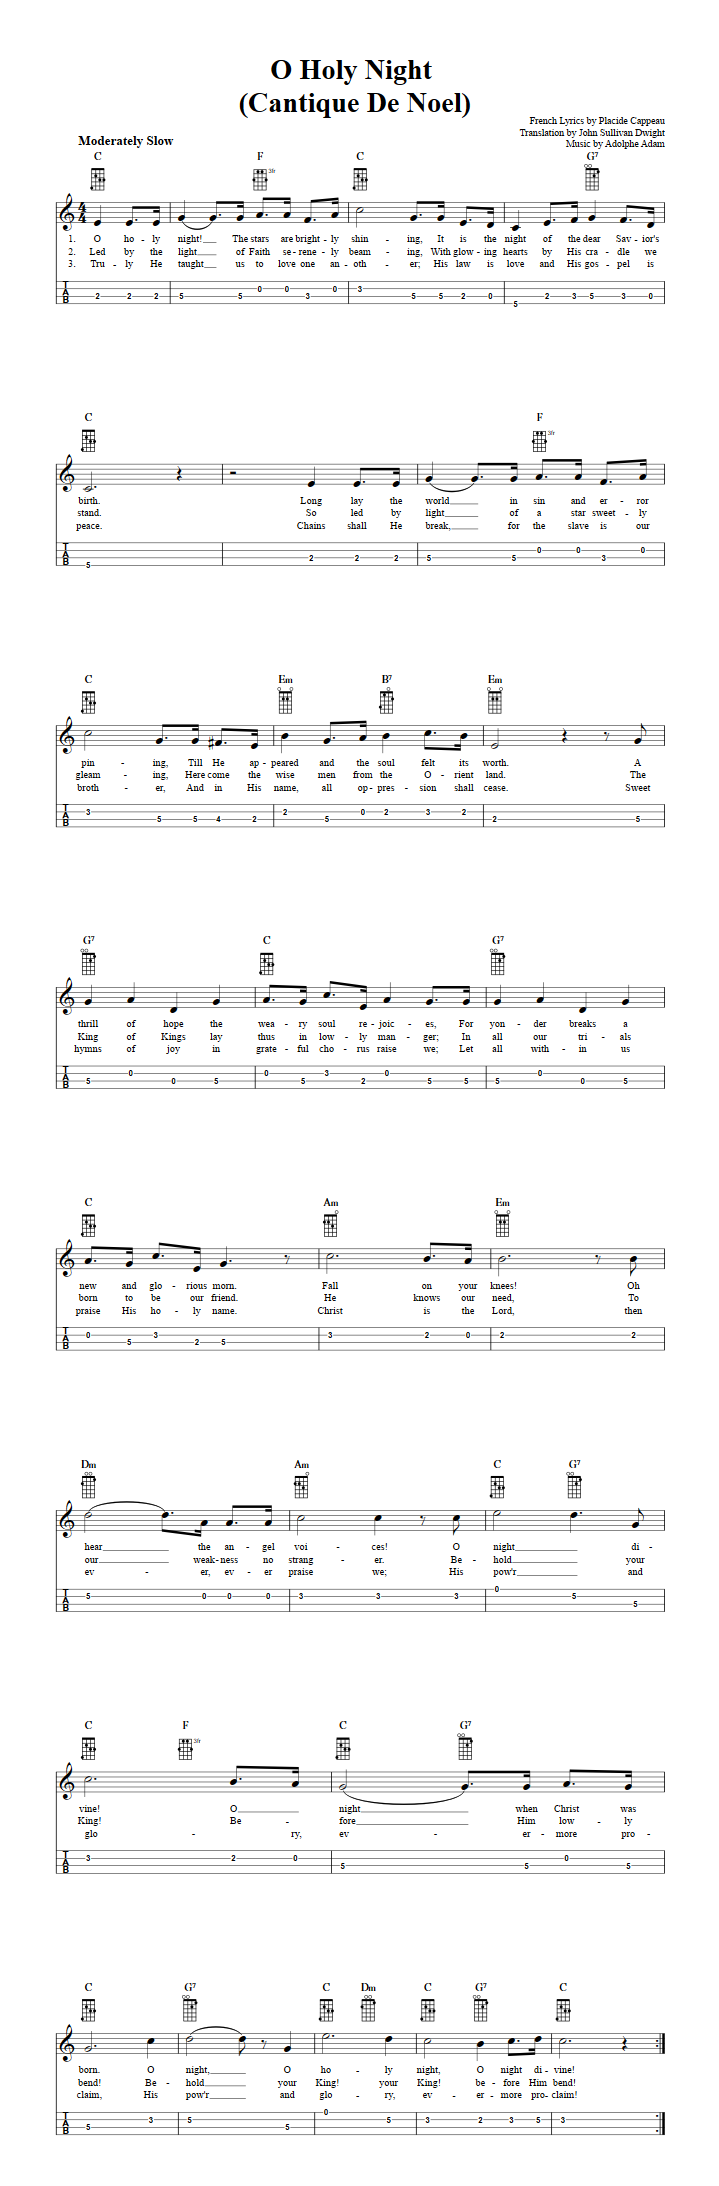 O Holy Night: Chords, Sheet Music and Tab for Mandolin with Lyrics